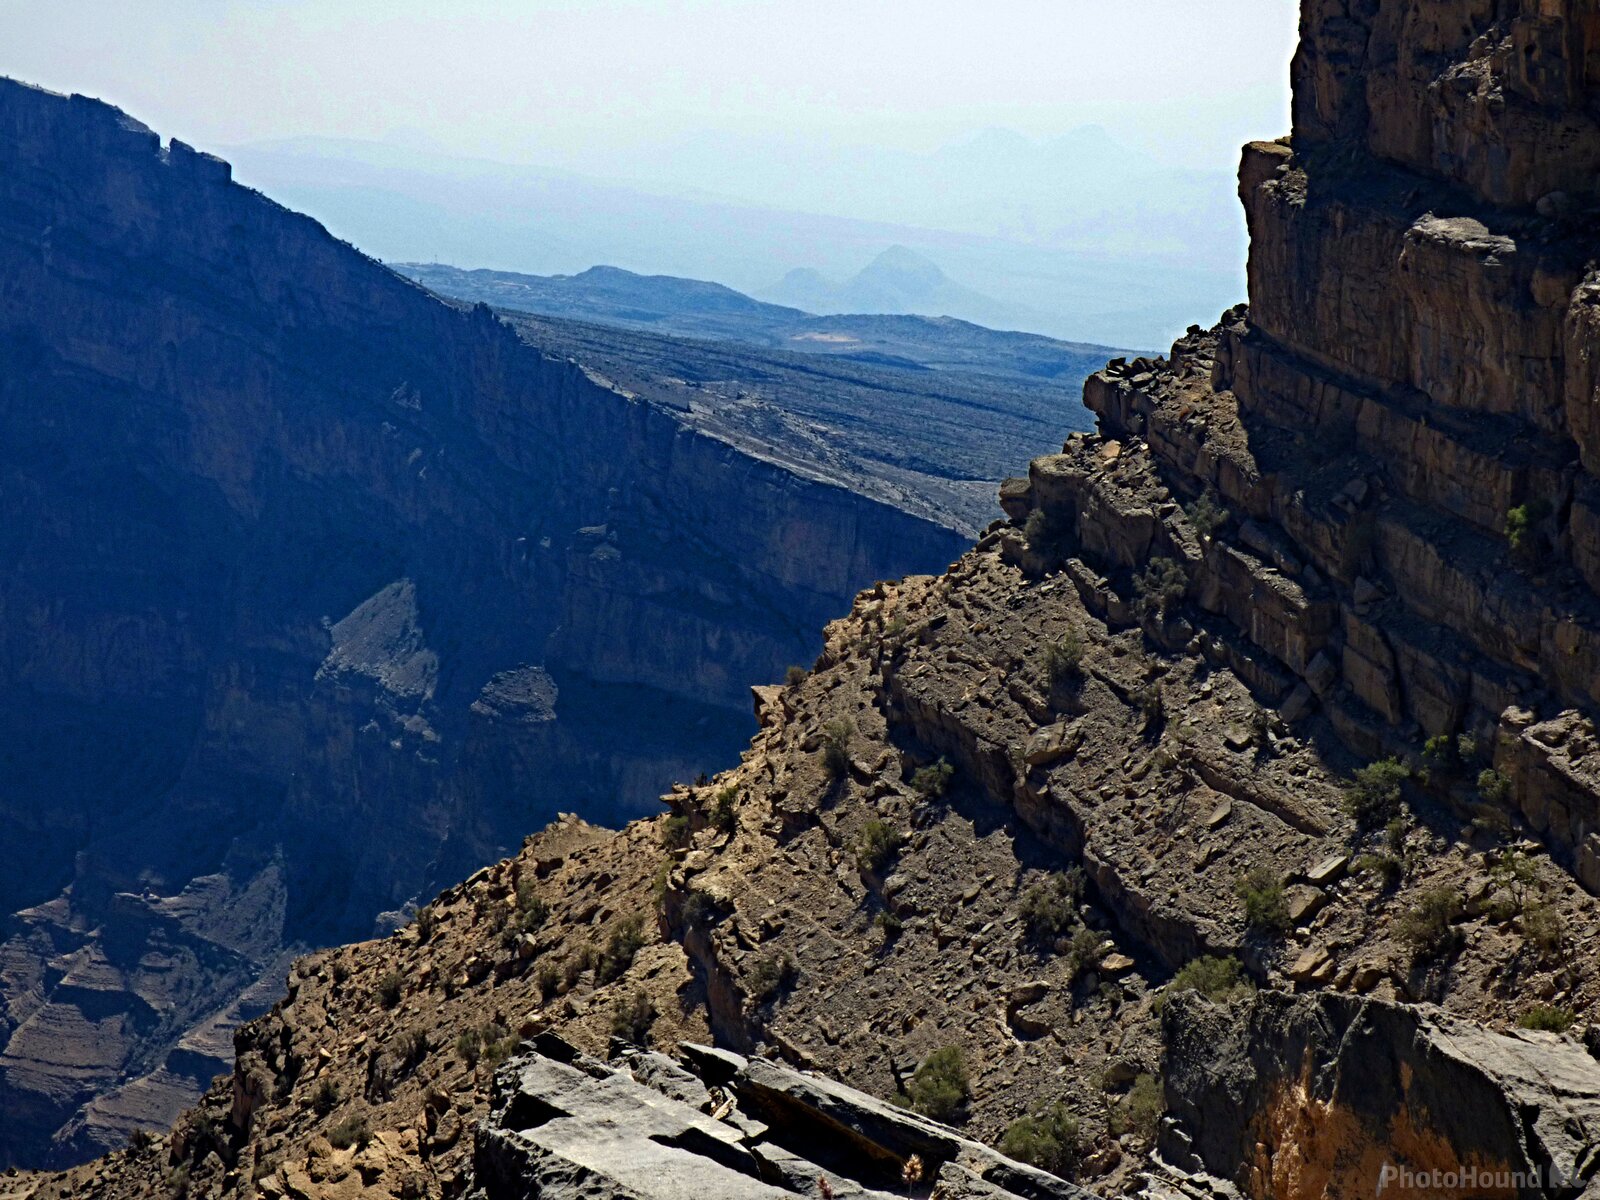 Image of Jebel Shams Viewpoint by Alexandra Sharrock